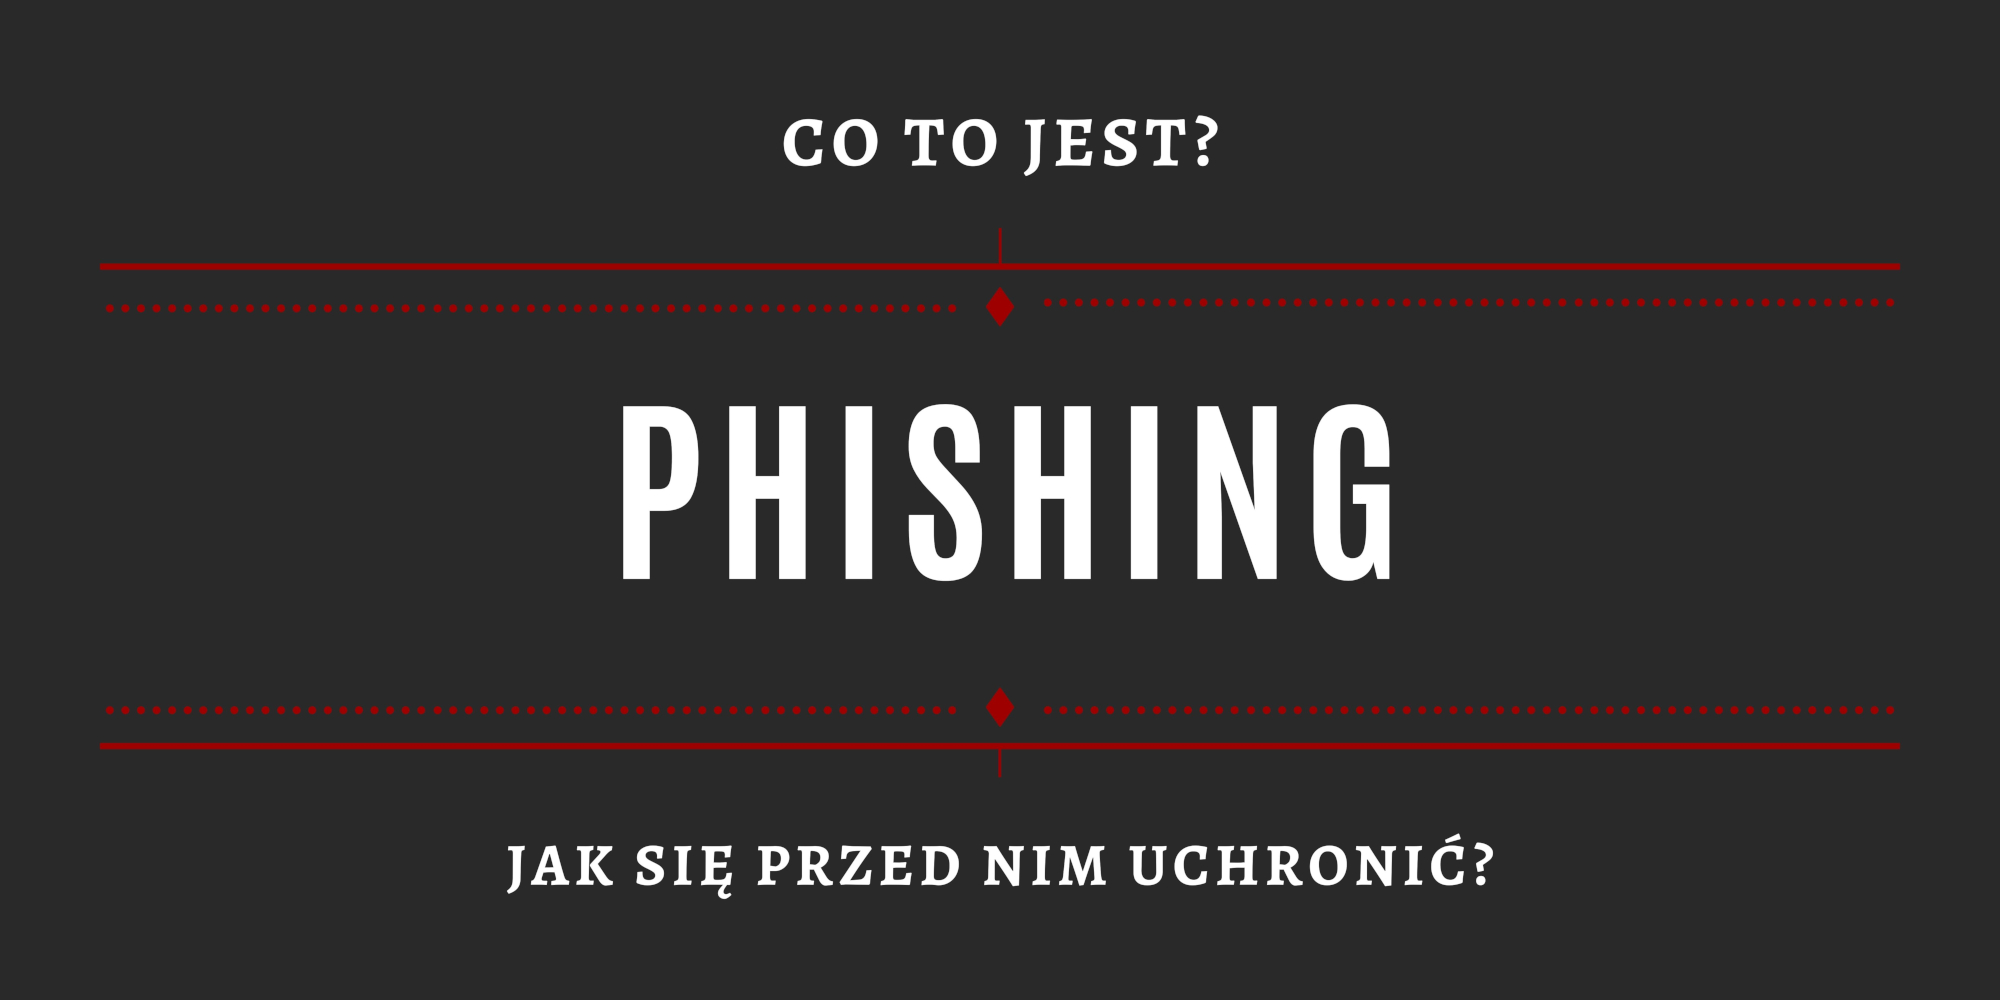 co to jest phishing?